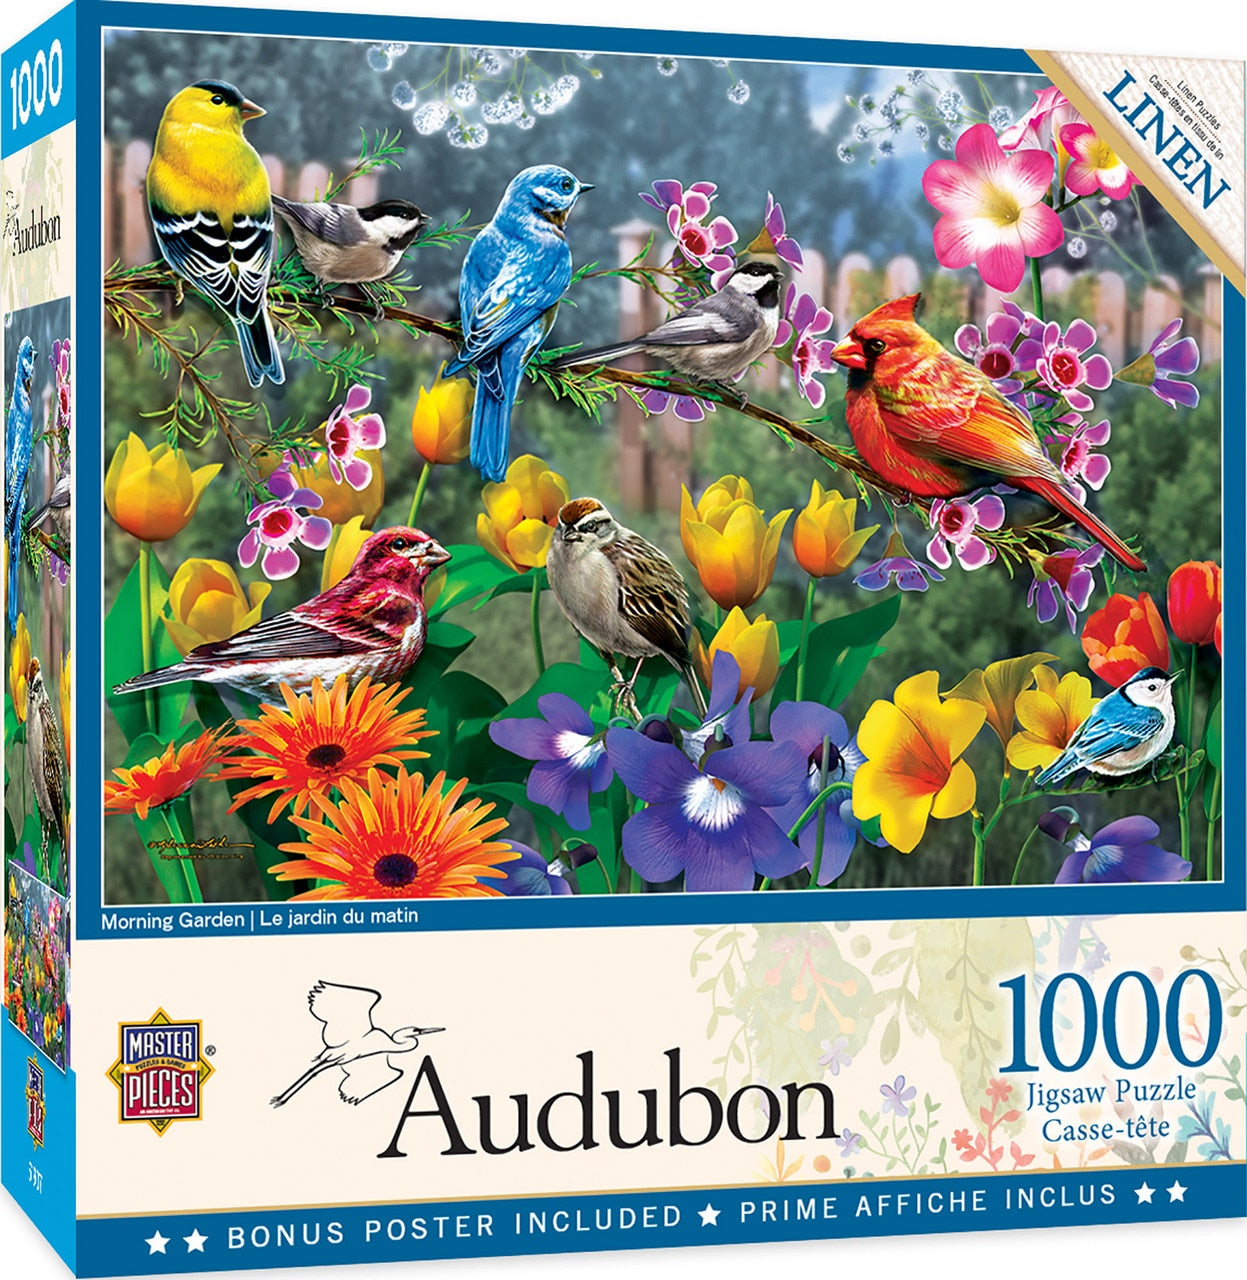 Morning Garden 1000 Piece Audubon Puzzle    